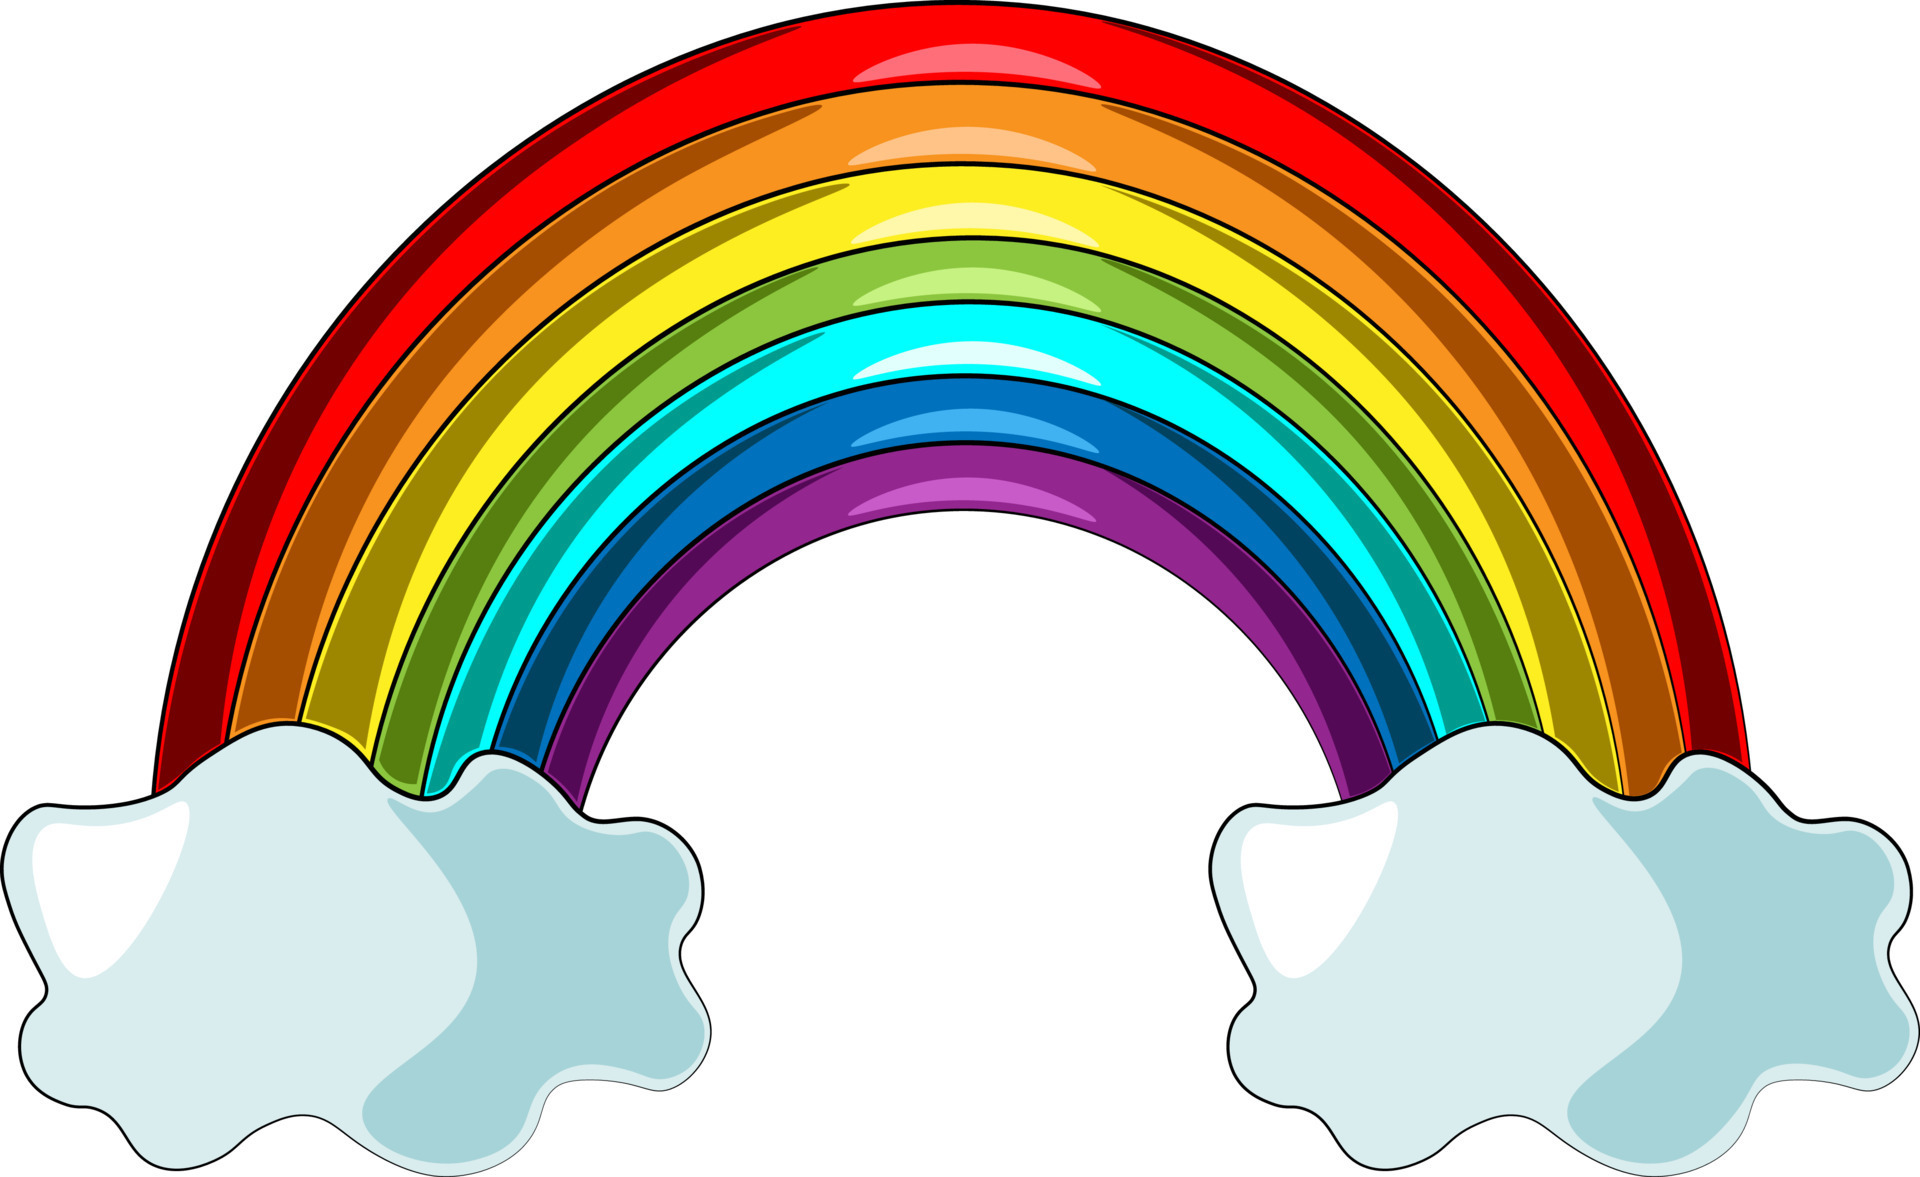 Single element Rainbow. Draw illustration in colors 7652045 Vector Art ...